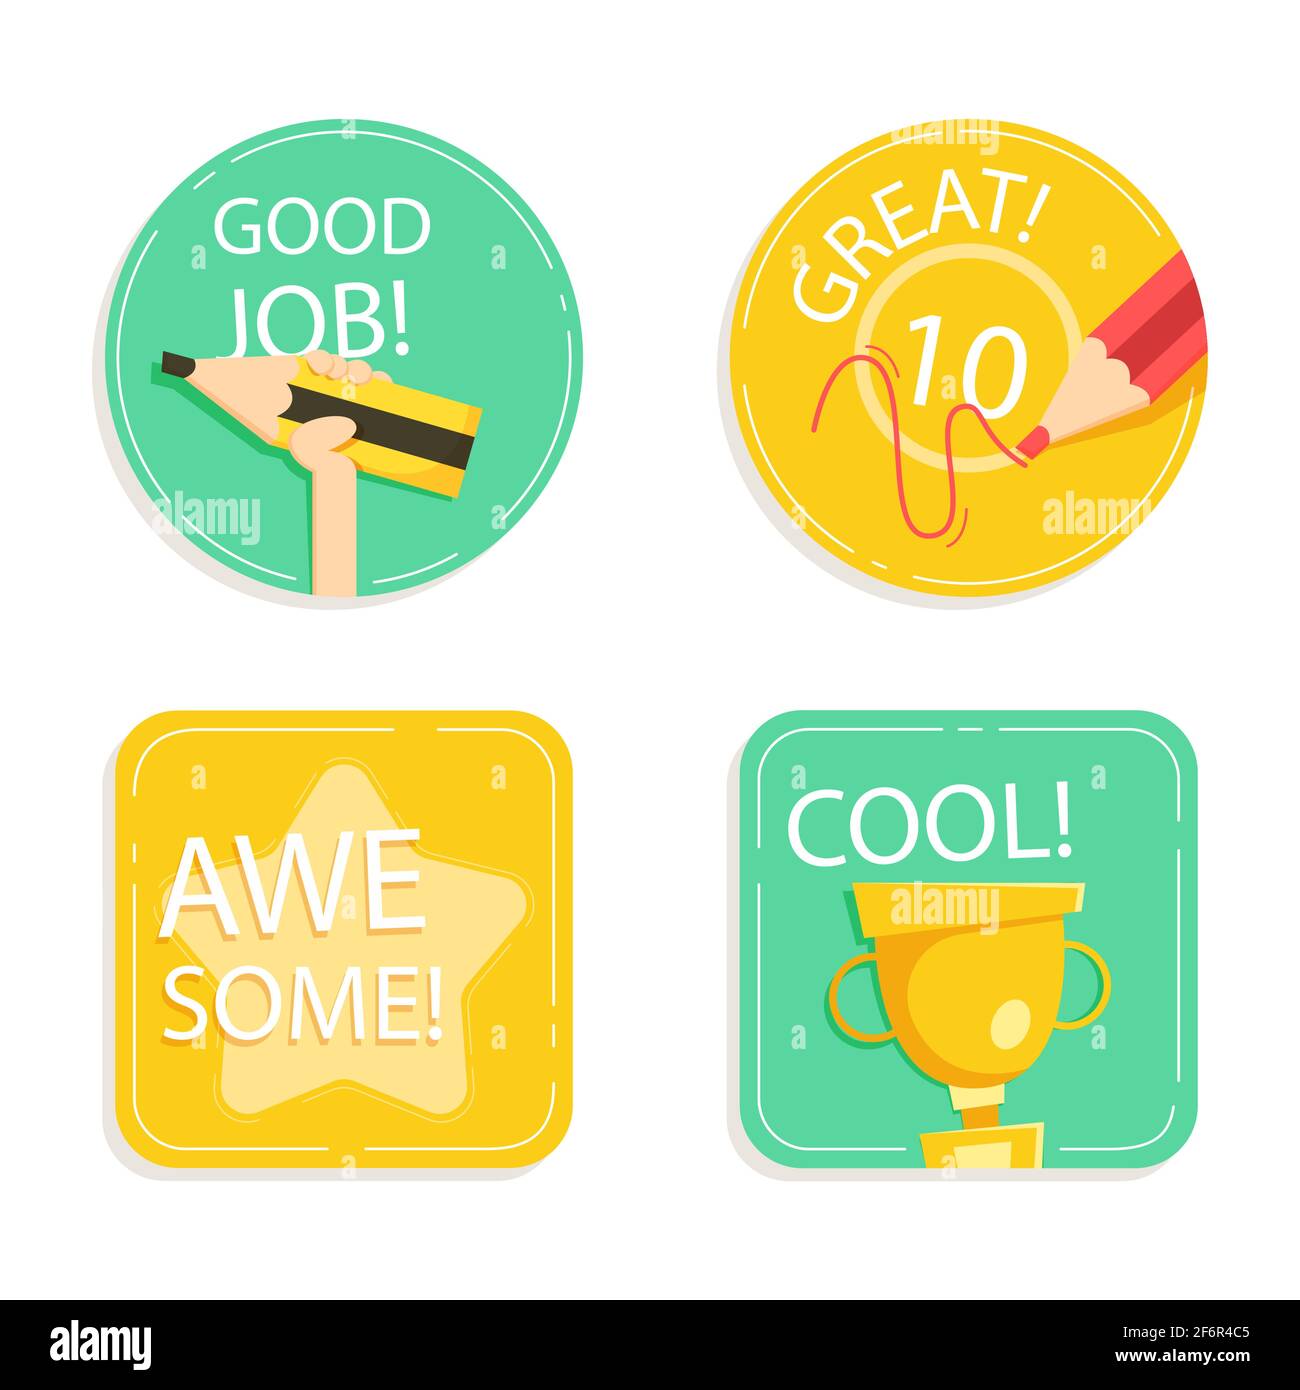 https://c8.alamy.com/comp/2F6R4C5/set-of-good-job-and-great-job-stickers-vector-illustration-2F6R4C5.jpg